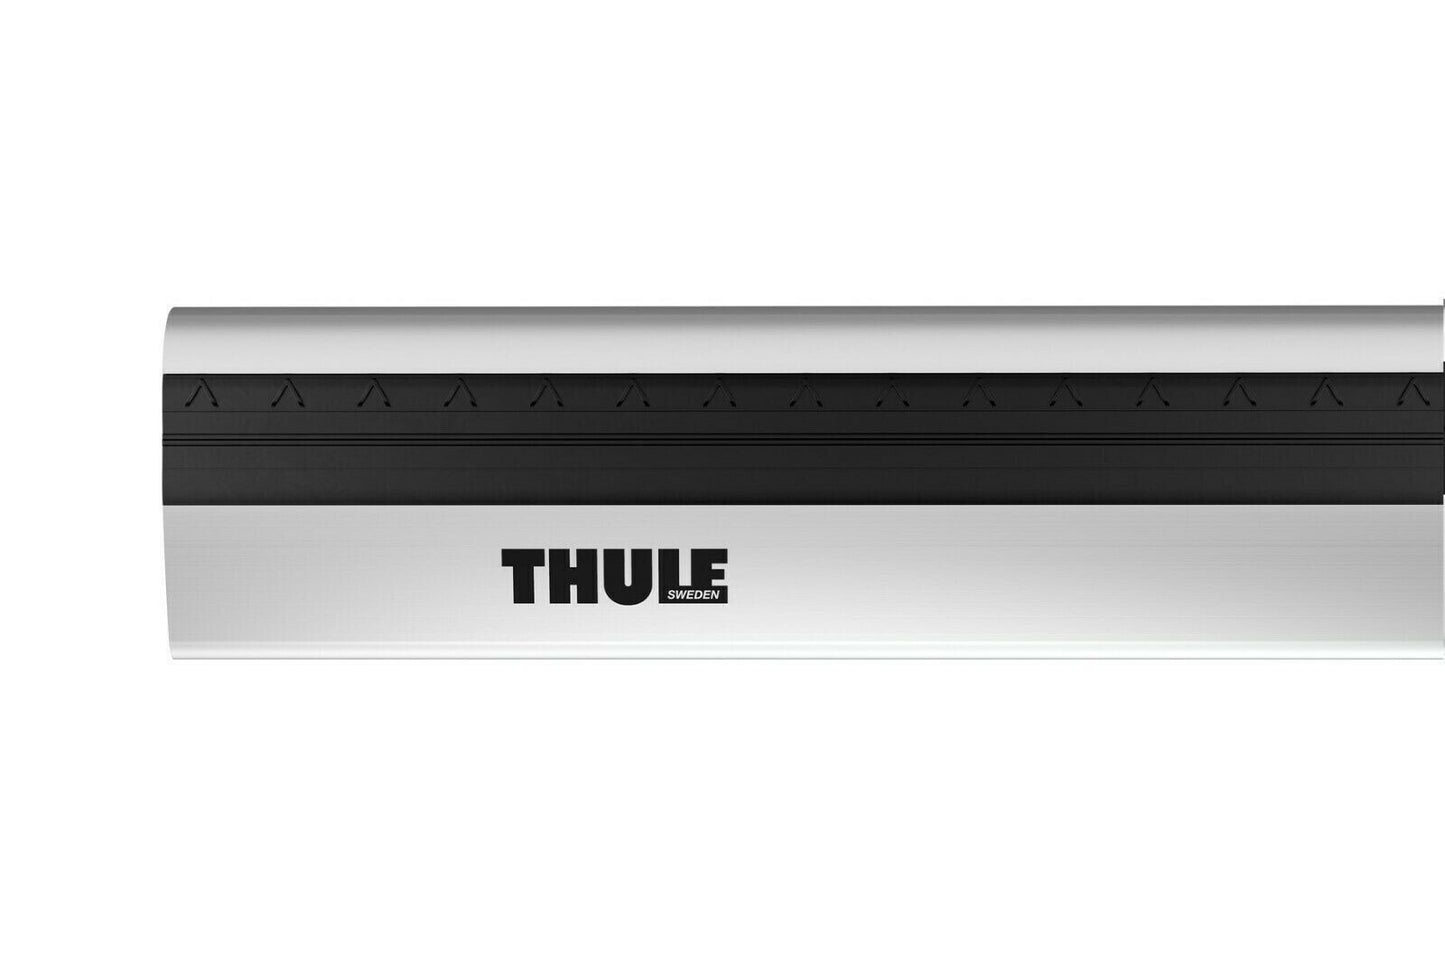 Thule Wingbar Edge 104 (104cm/41 in) Single Load Bar